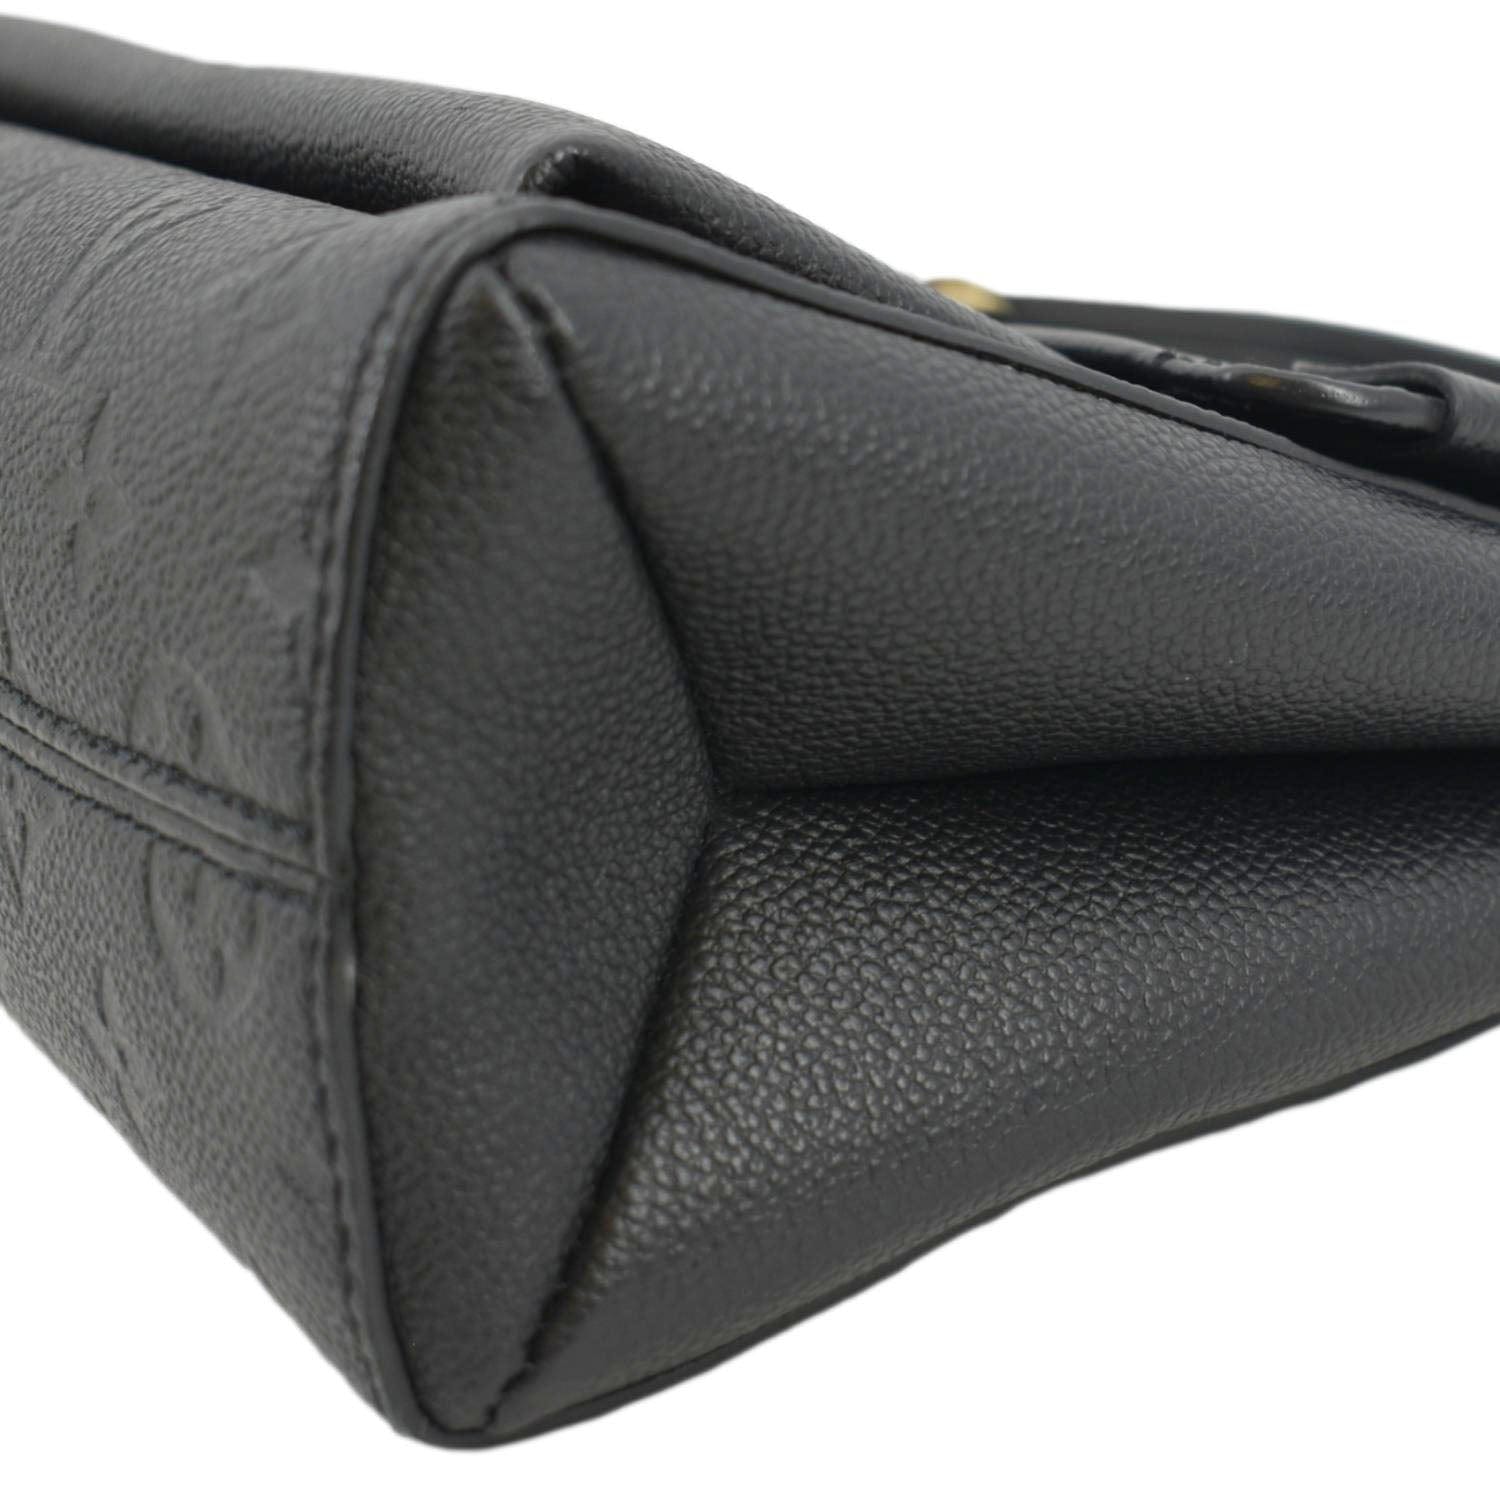 Vavin leather handbag Louis Vuitton Black in Leather - 35685854